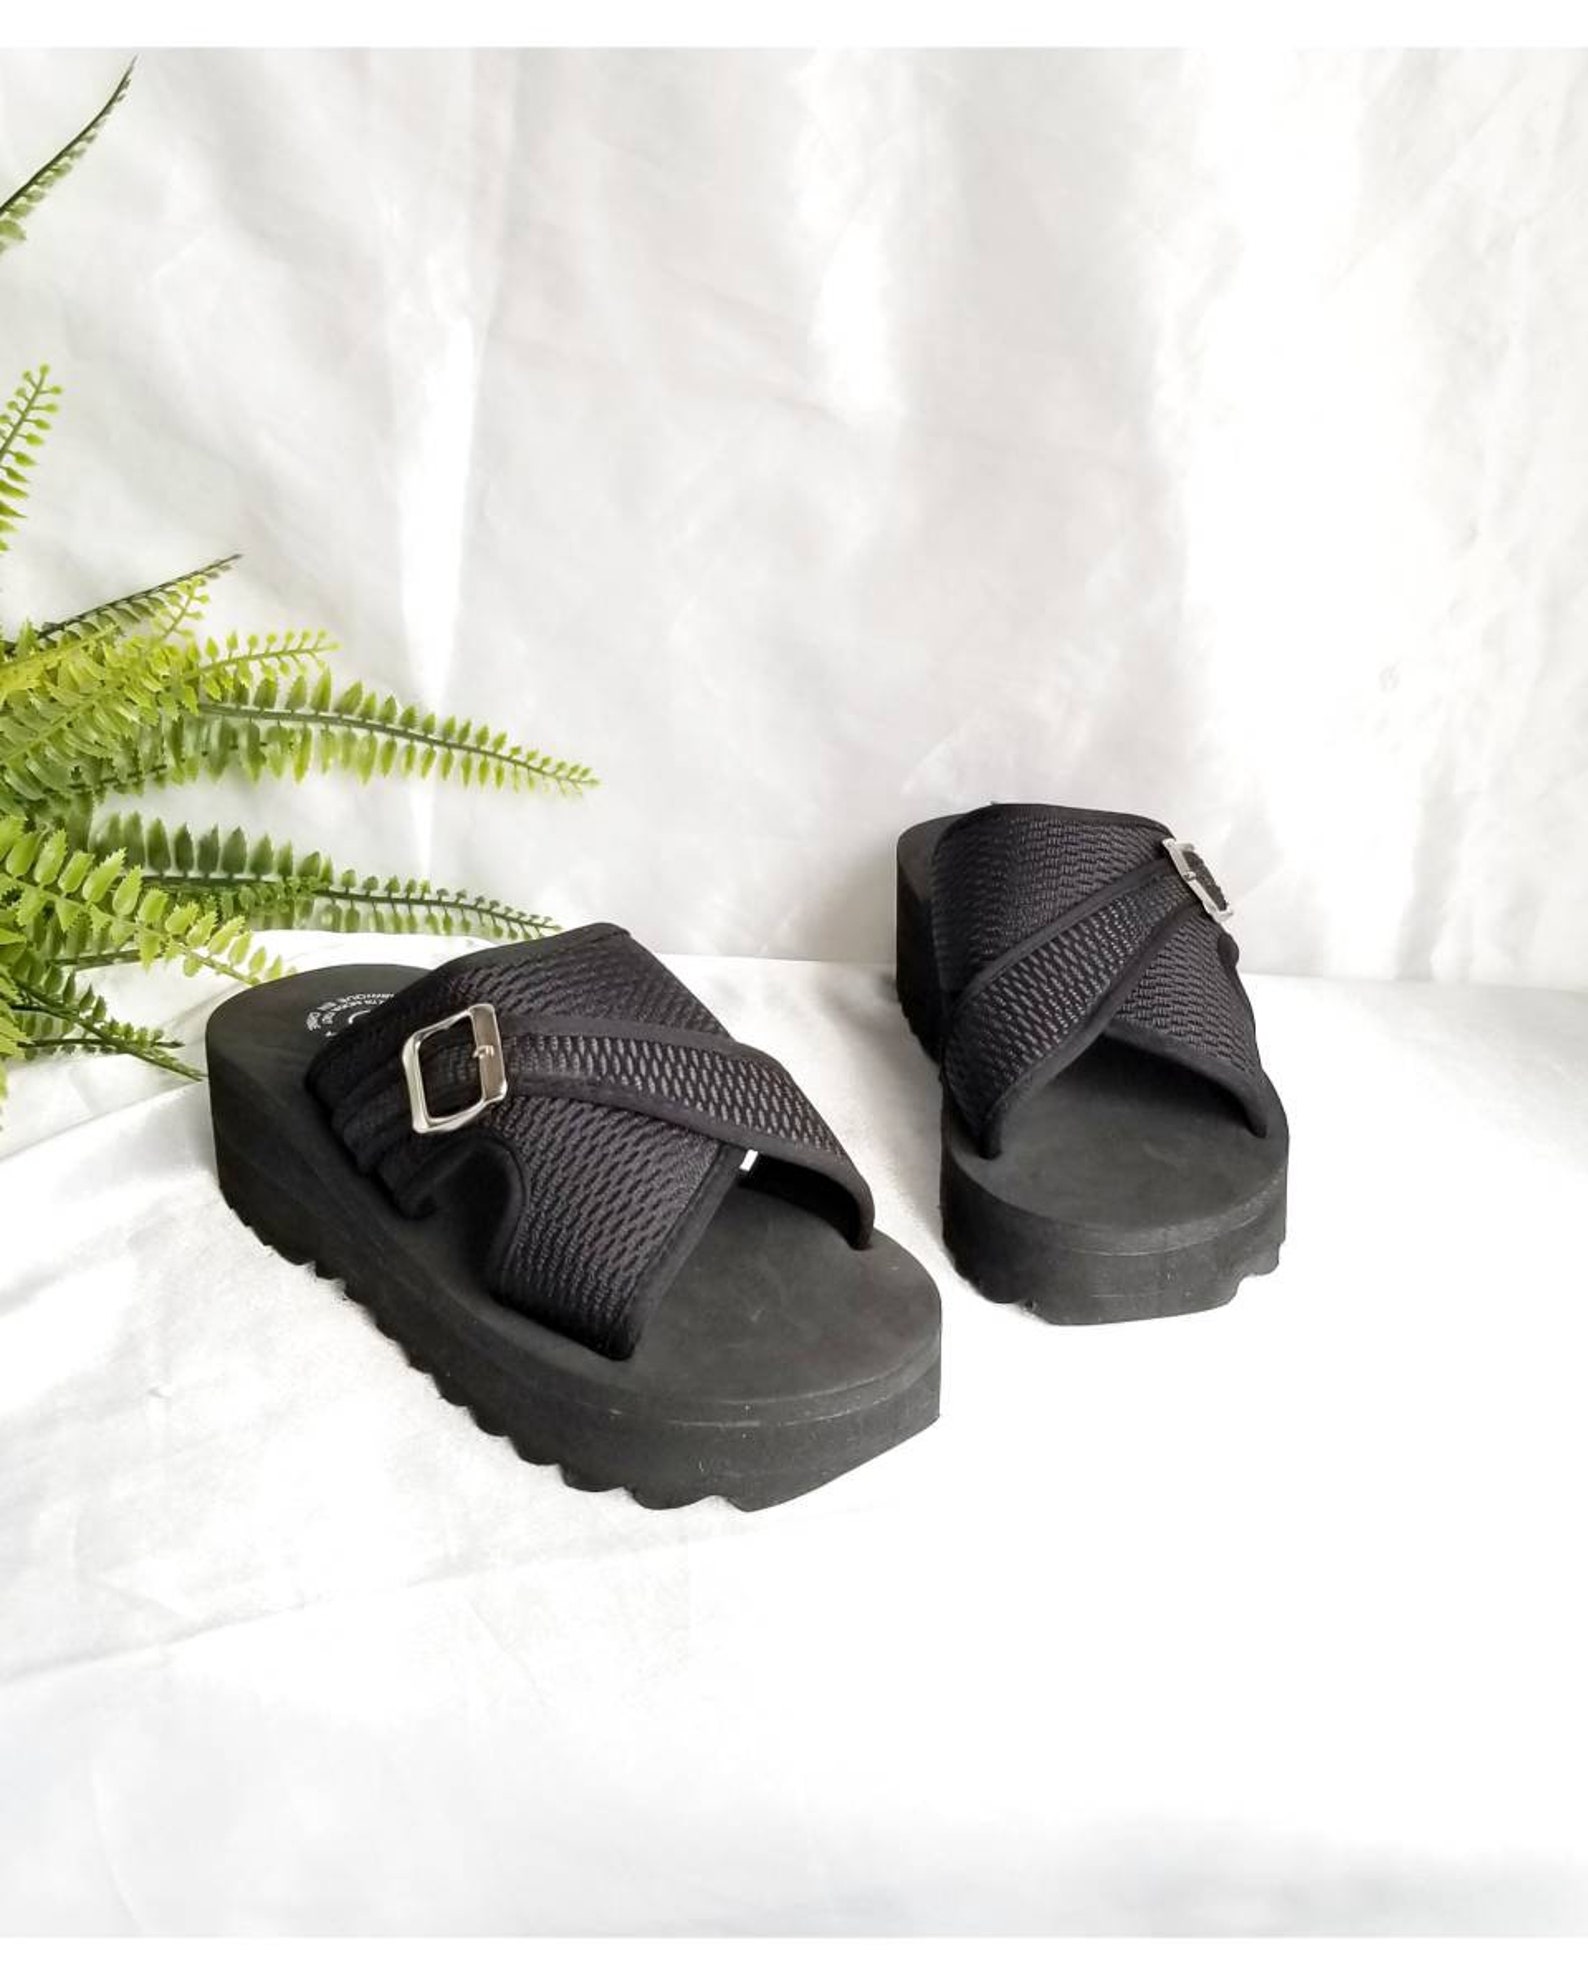 Size 7 to 7.5 / Y2k Foam Sandals Black Foam Sandals Chunky | Etsy